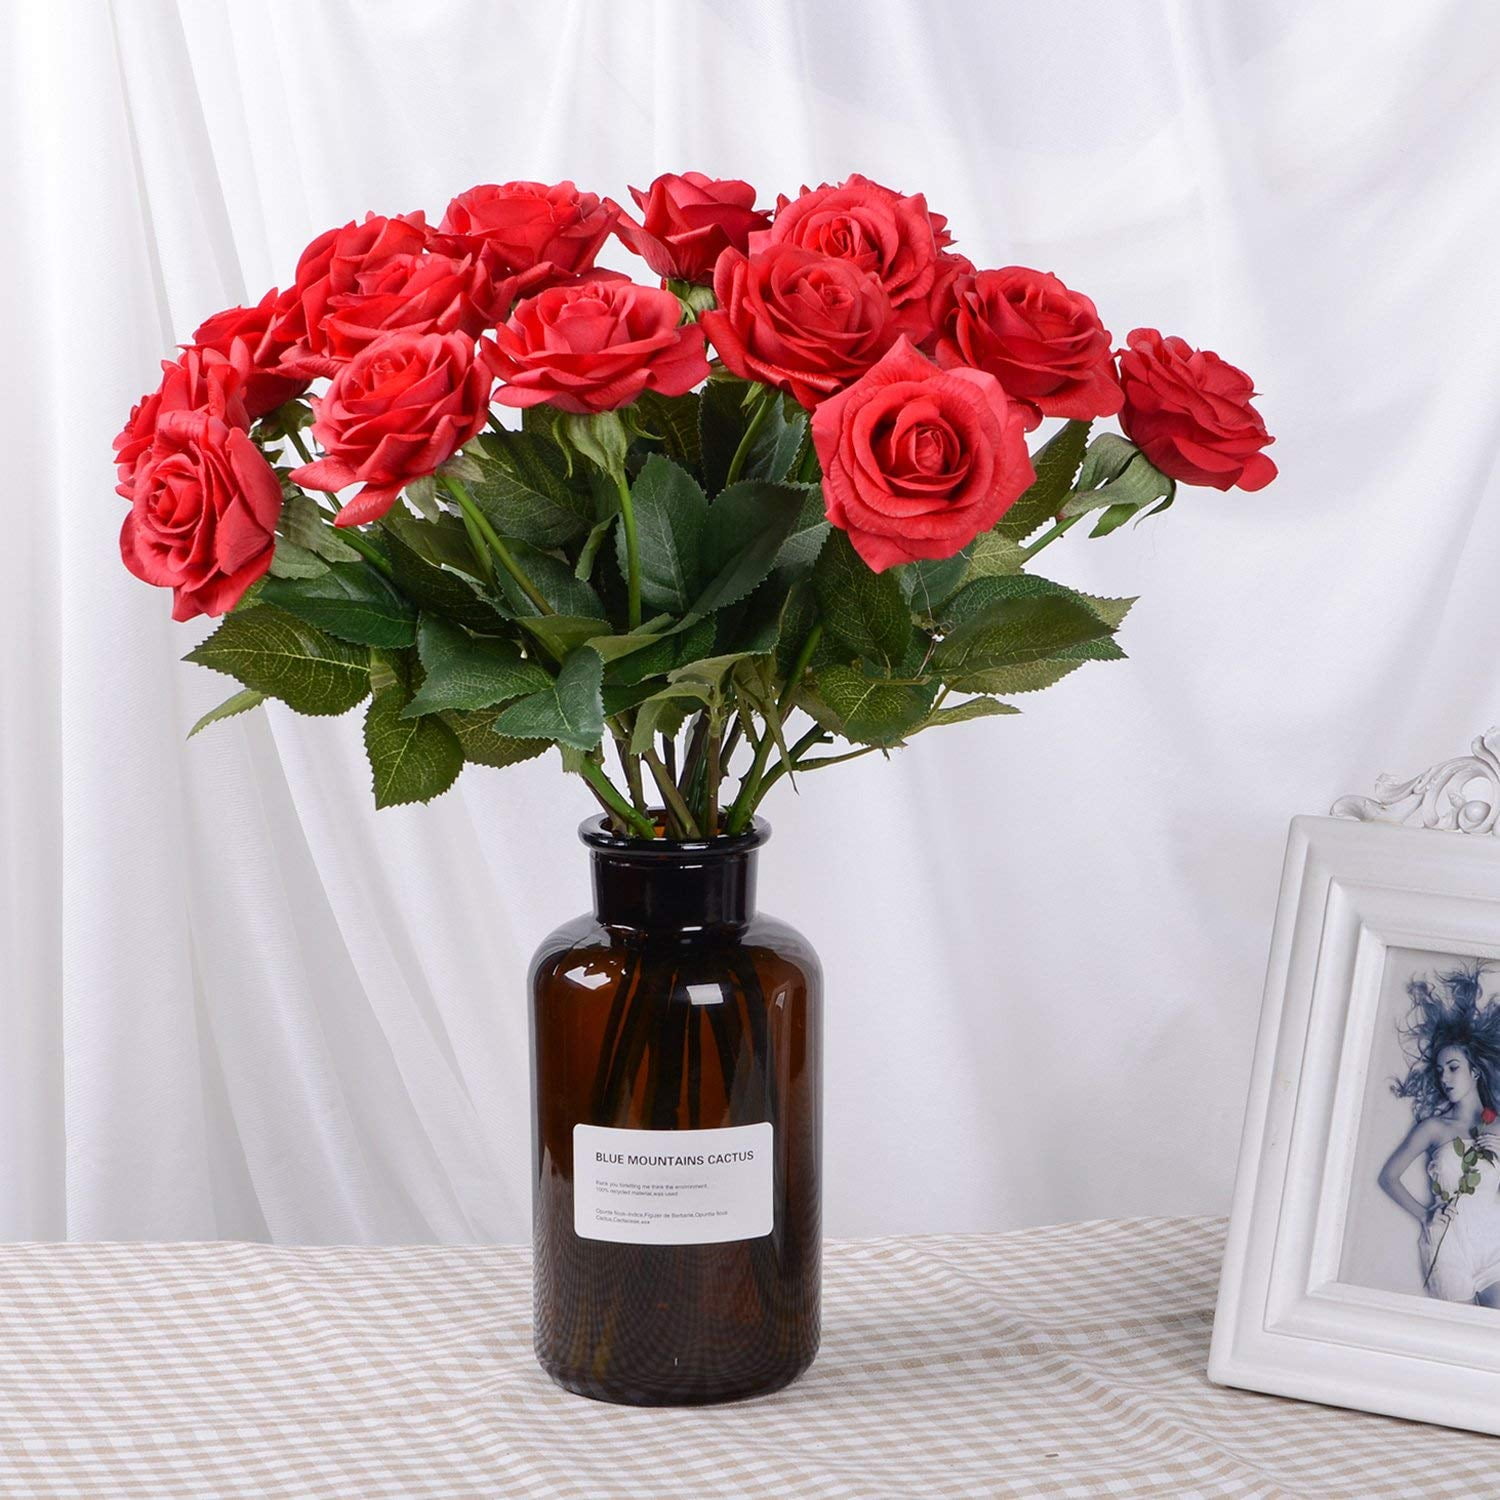 12 Open Roses PURPLE Long Stem Silk Flowers Wedding Centerpieces Bouquet 